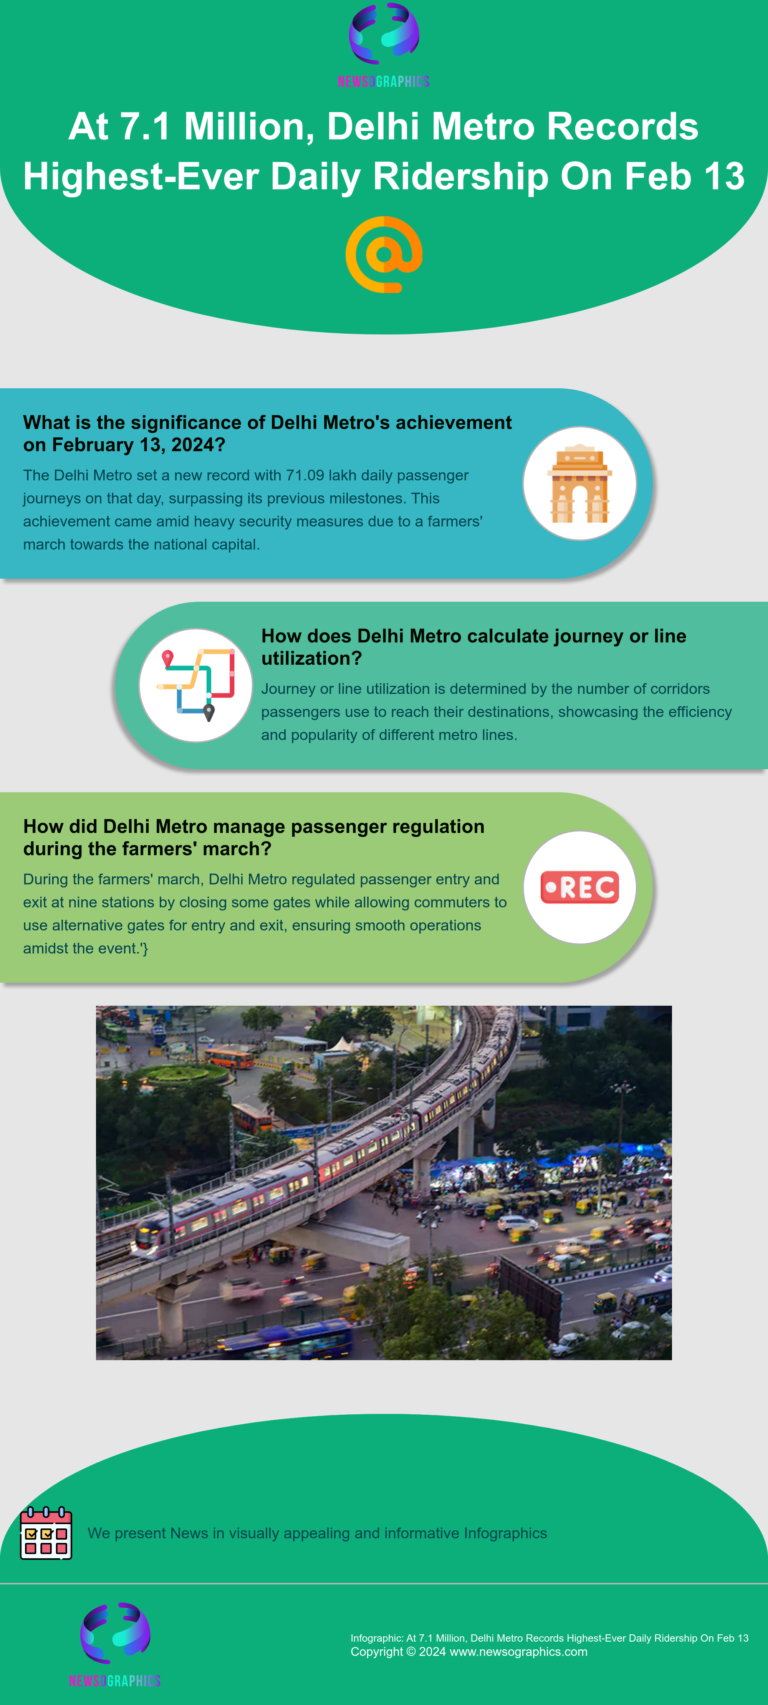 At 7.1 Million, Delhi Metro Records Highest-Ever Daily Ridership On Feb 13